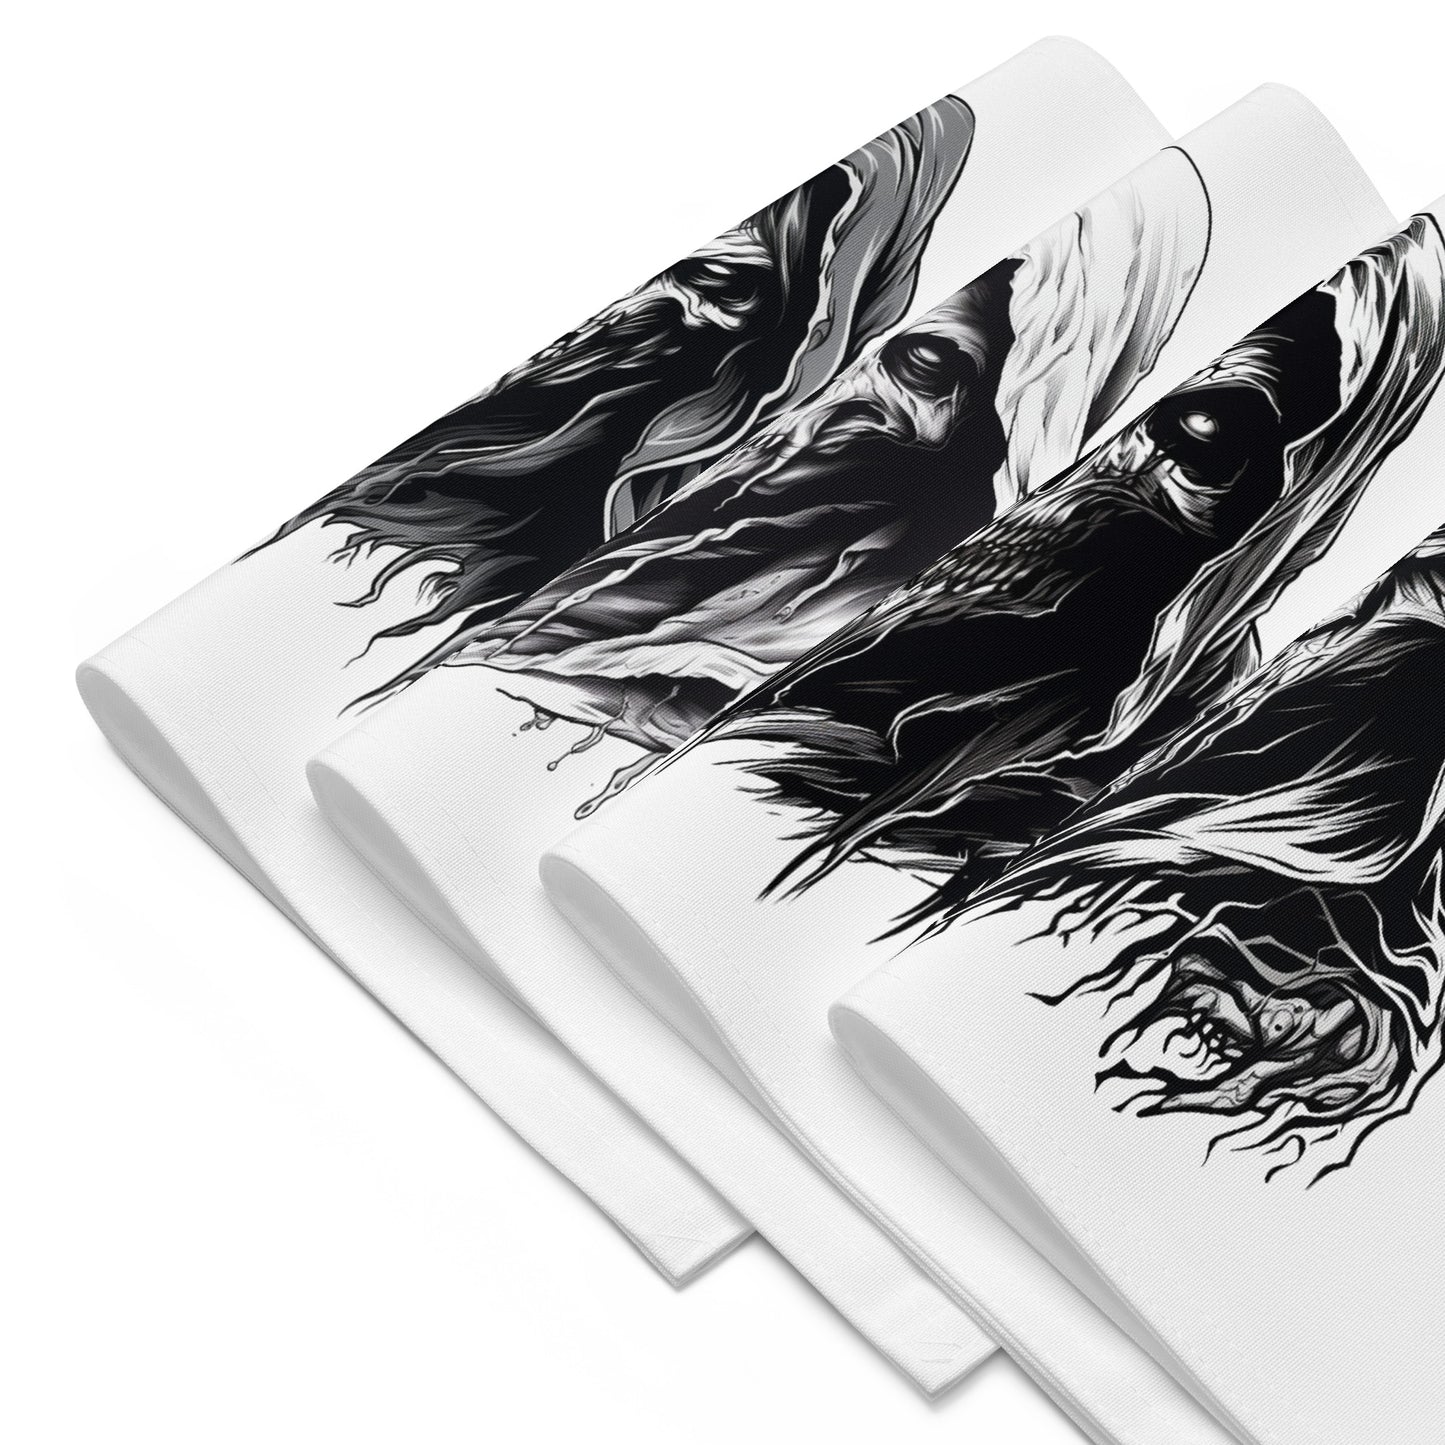 Neduz Dark Lore Placemat Set – Grim Reaper & Eldritch Designs (4 pcs)